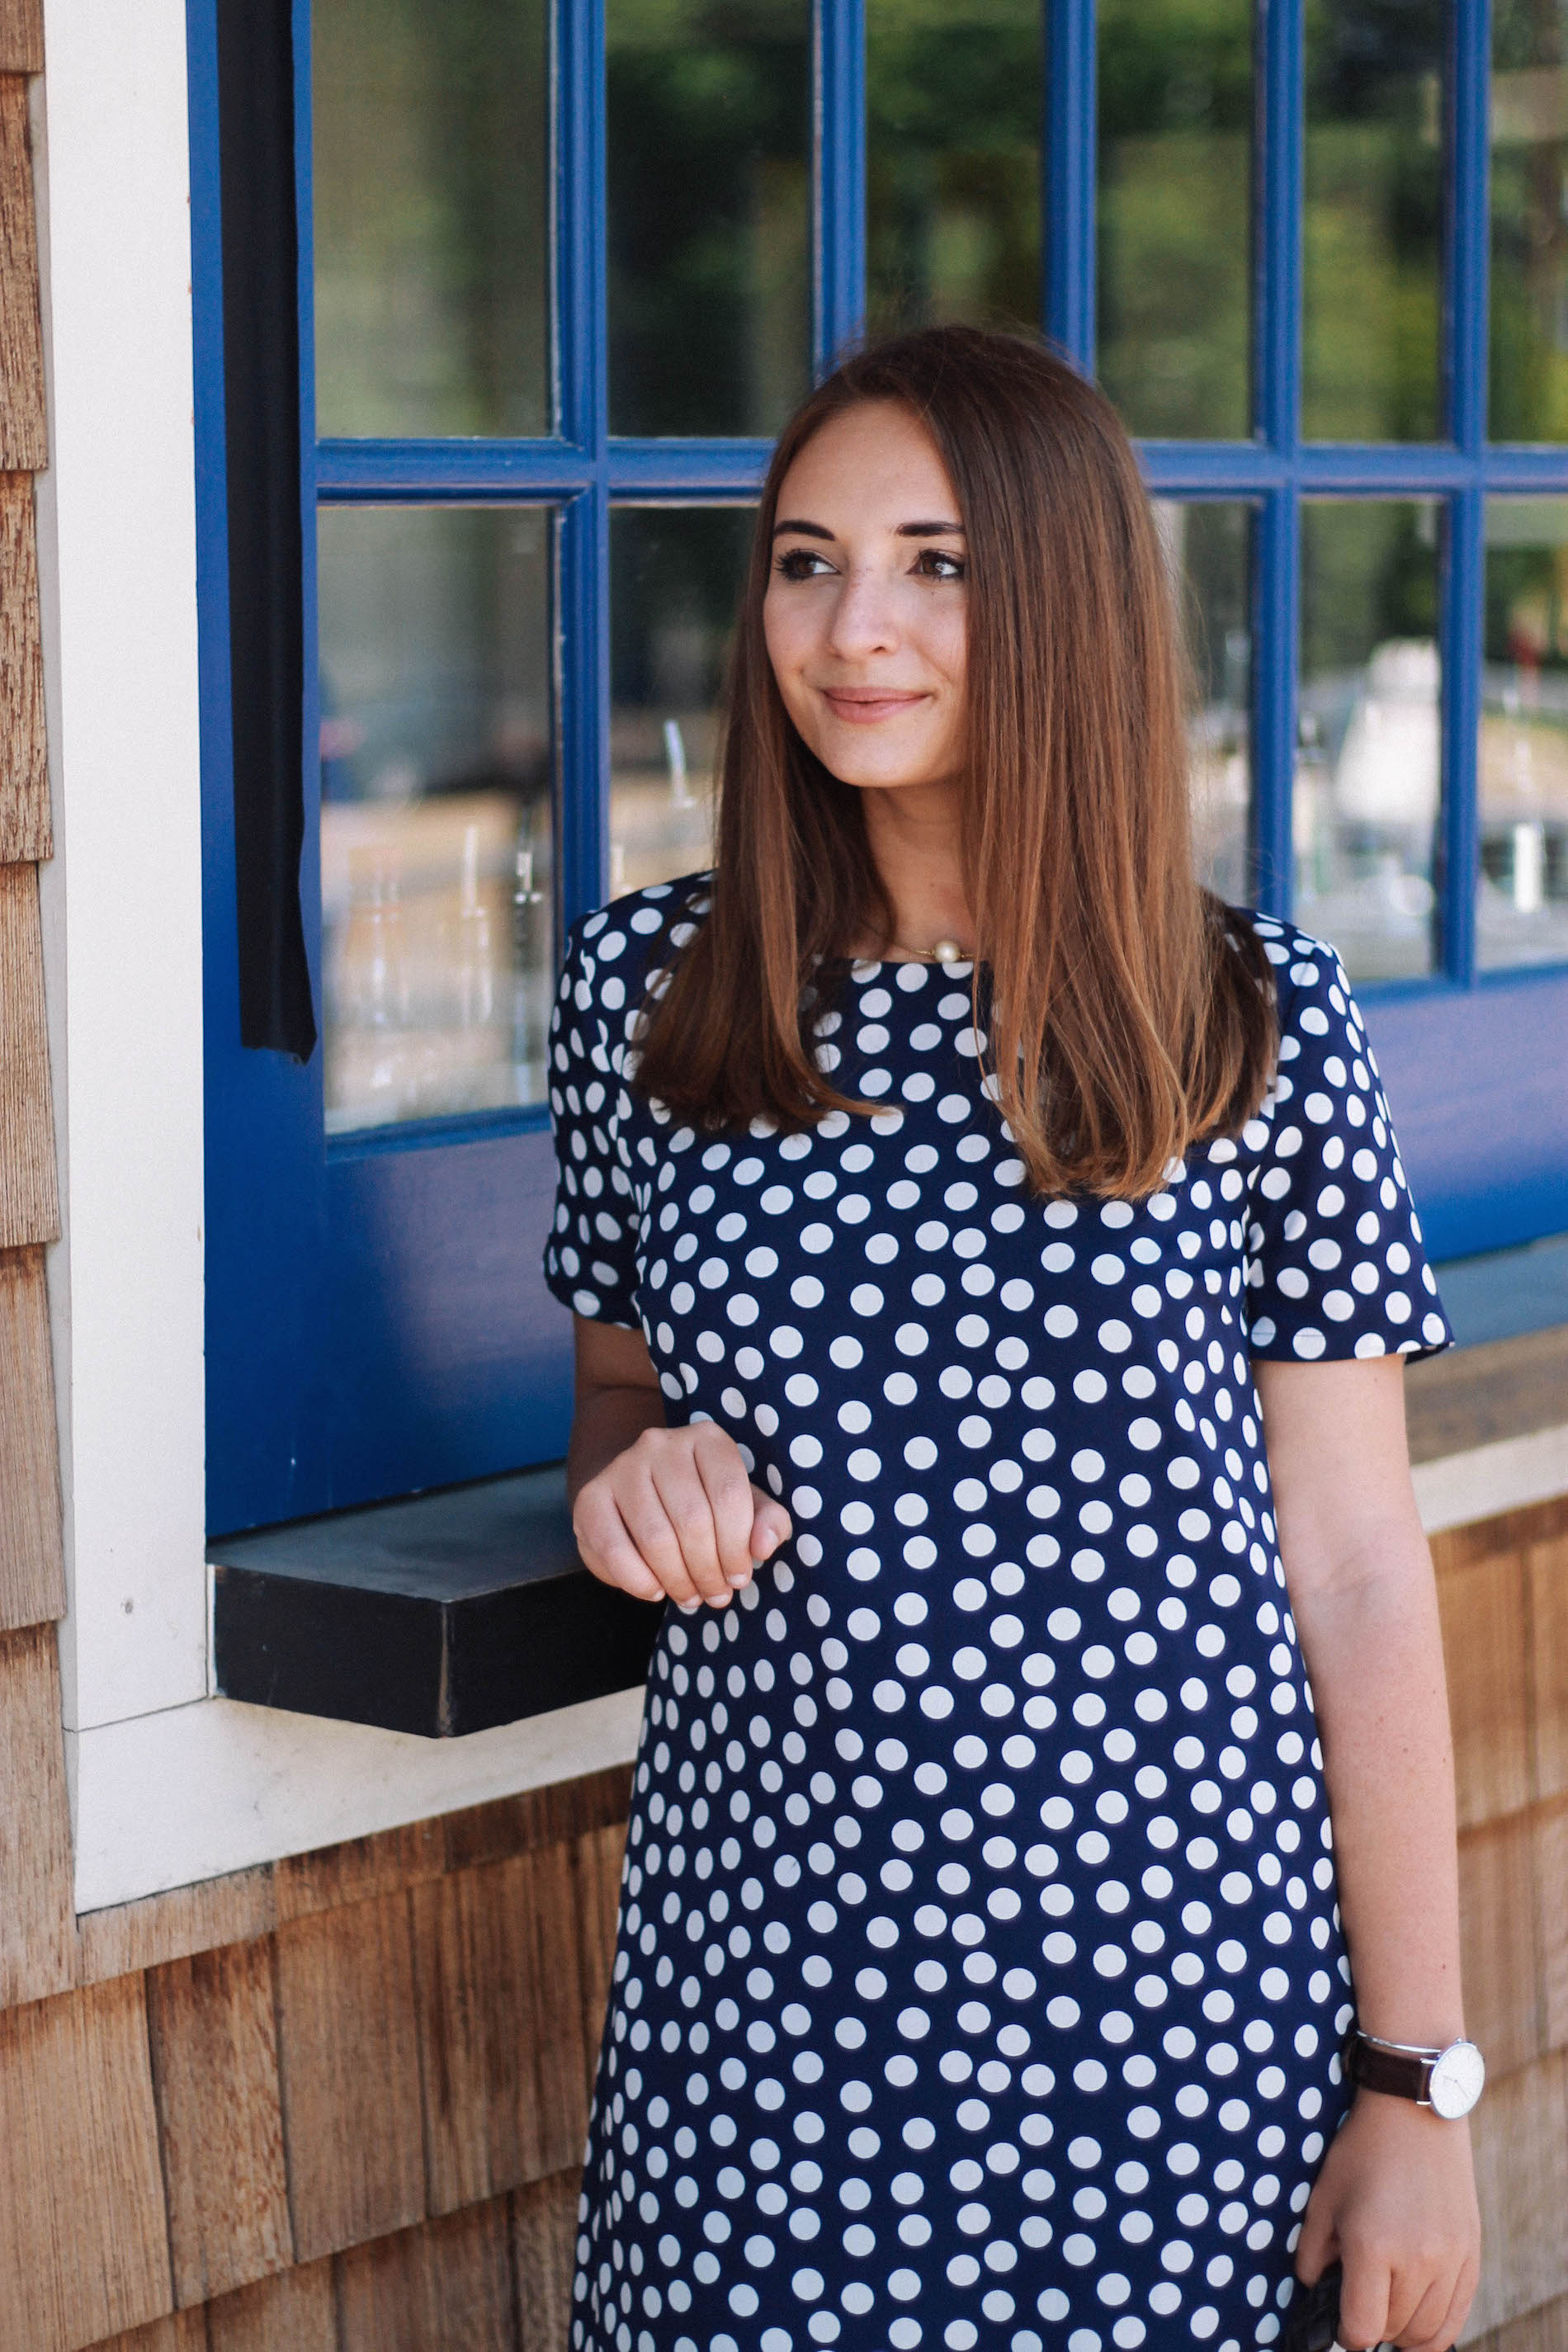 Polka Dot Dress fo Business Casual on the Go | The Coastal Confidence by Aubrey Yandow